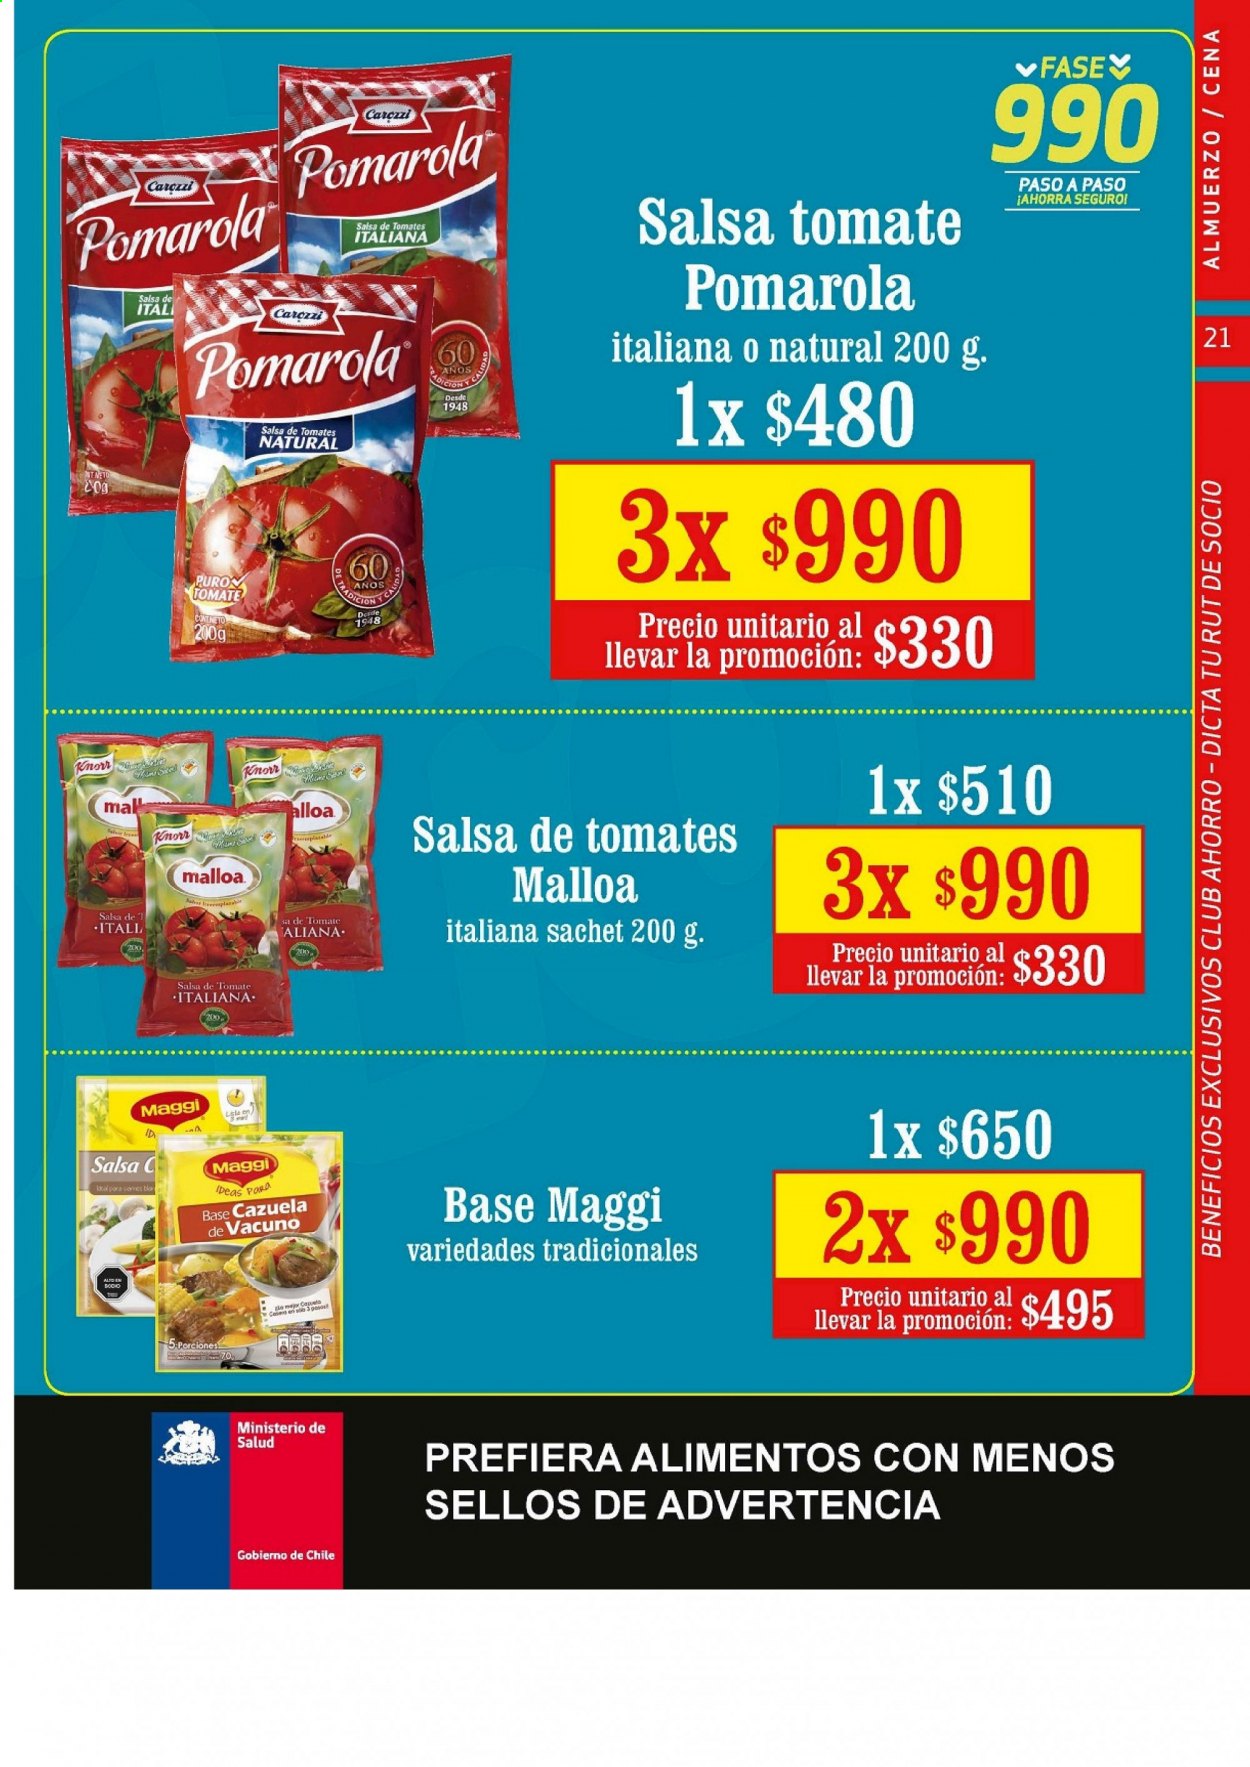 thumbnail - Catálogo Unimarc - 10.02.2021 - 09.03.2021 - Ventas - Knorr, Maggi, salsa, salsa de tomate. Página 21.